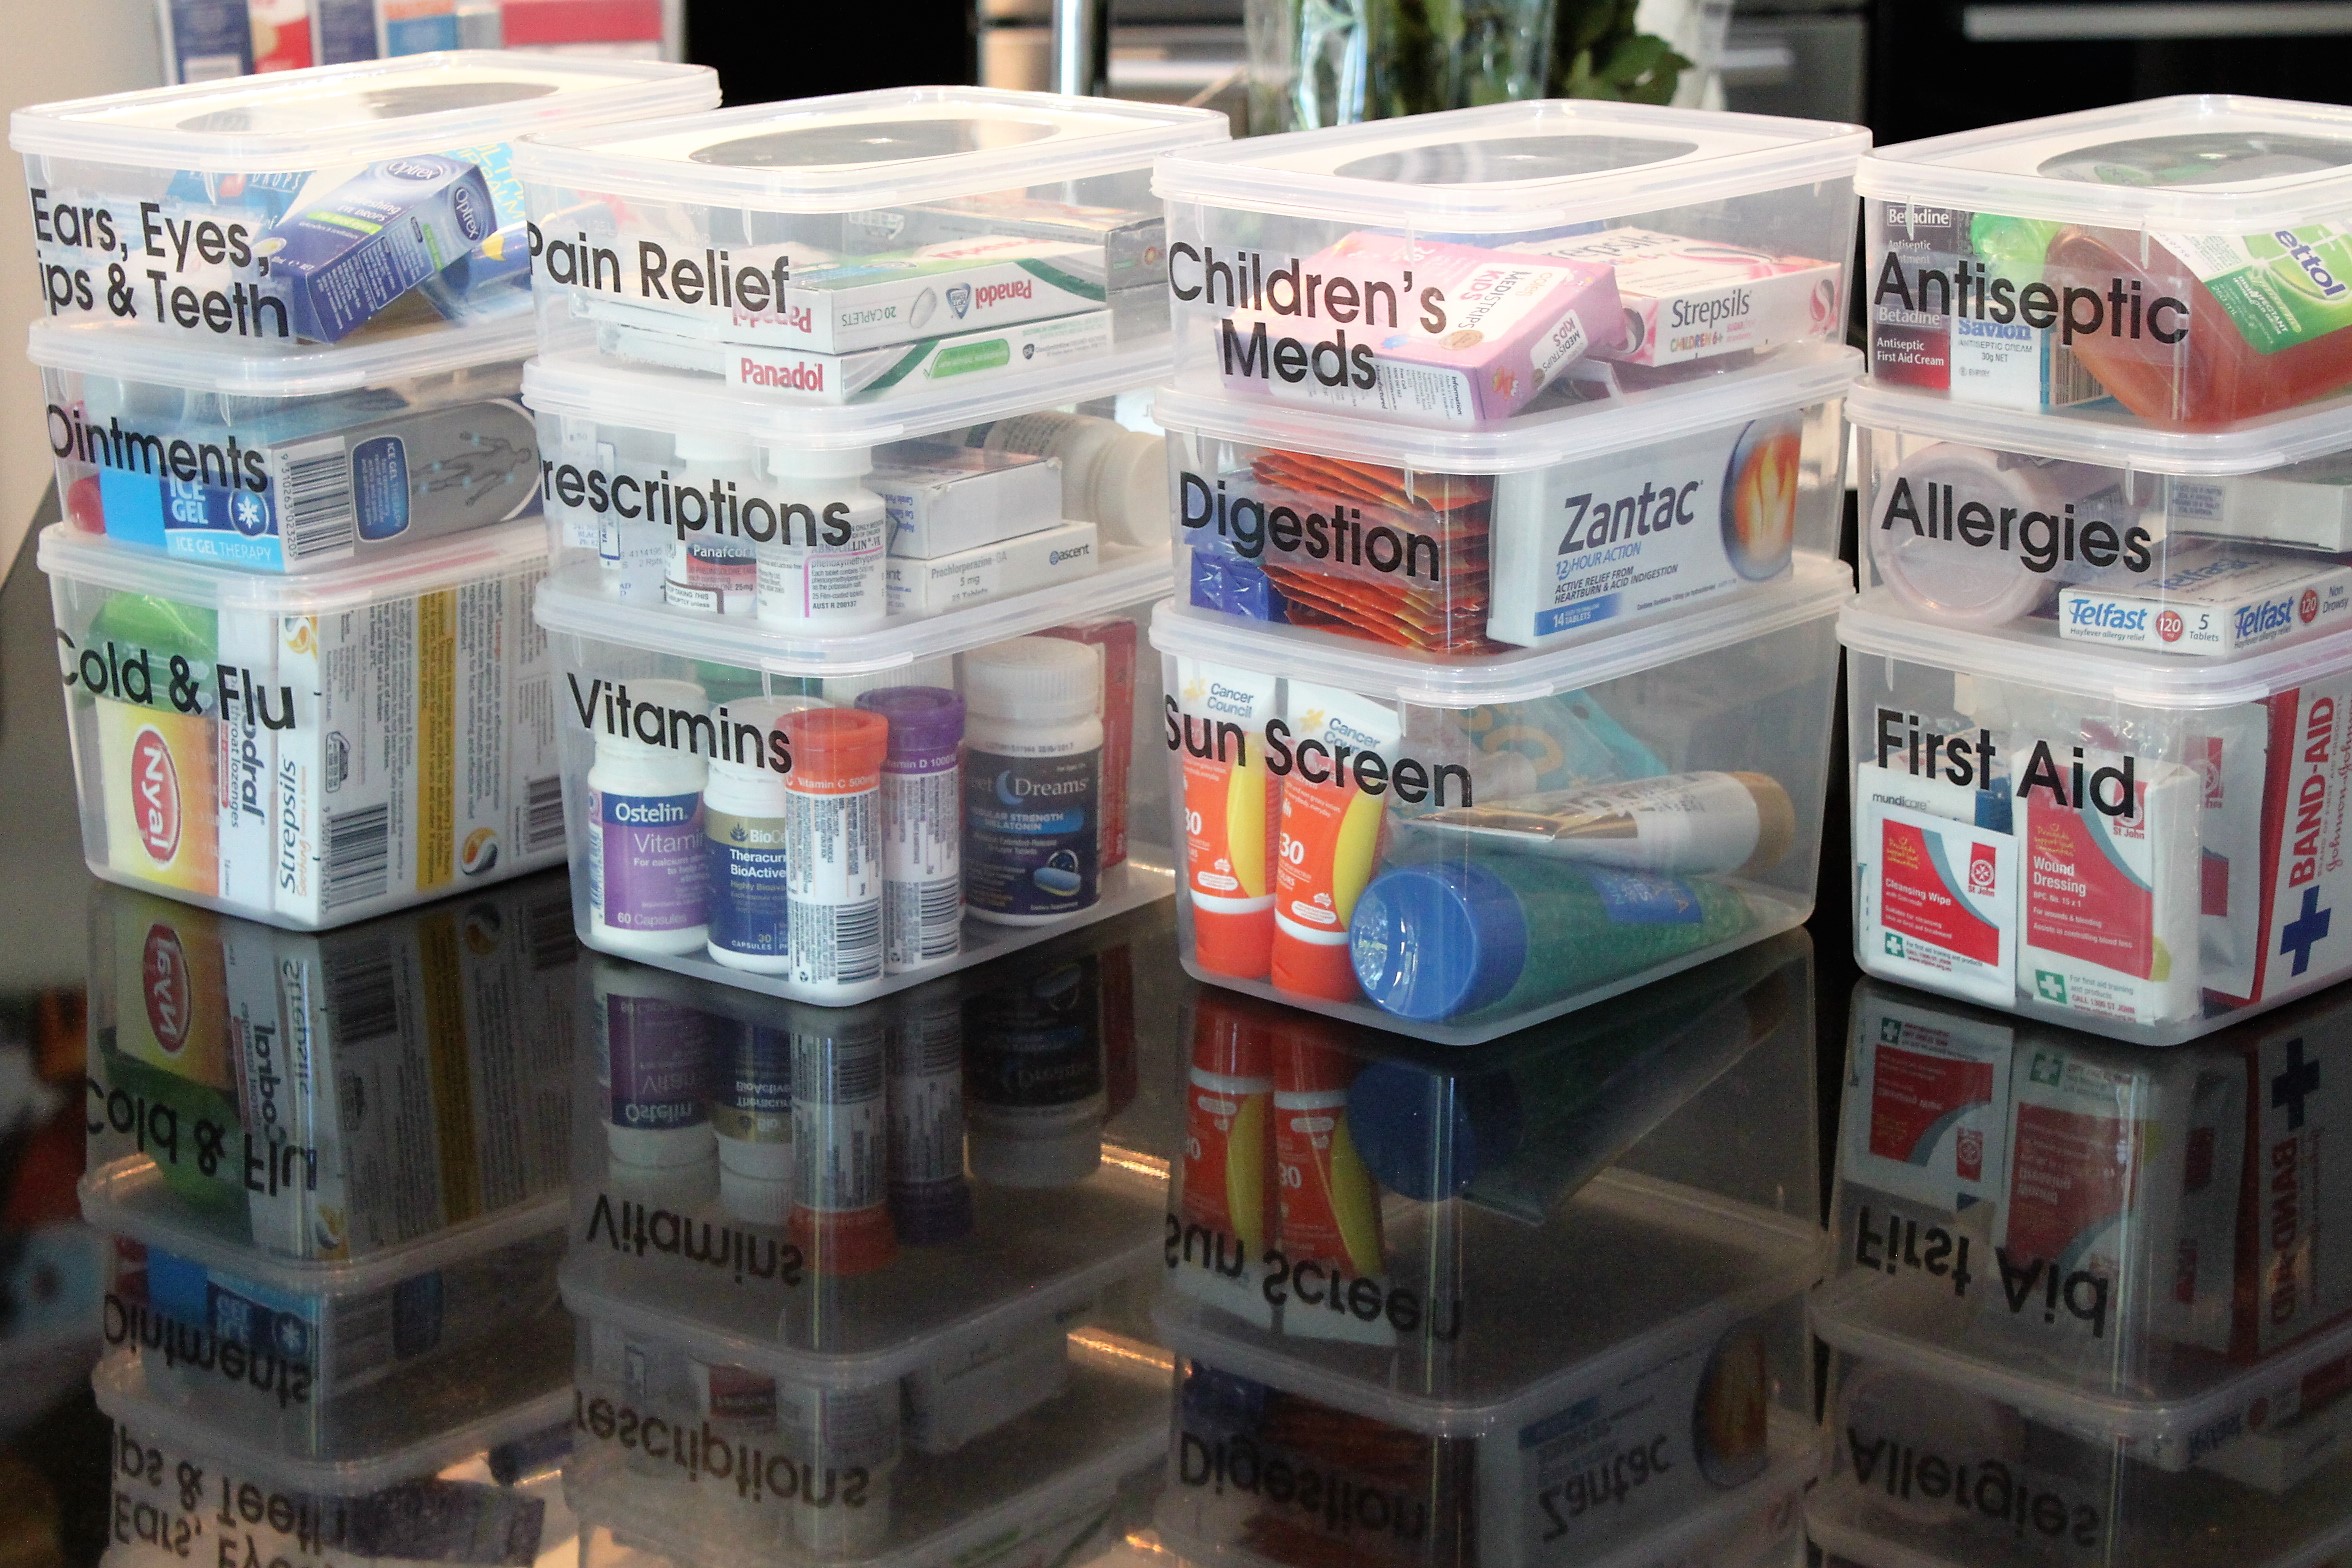 A Pinterest Worthy Medicine Cabinet! – Kmart Styling